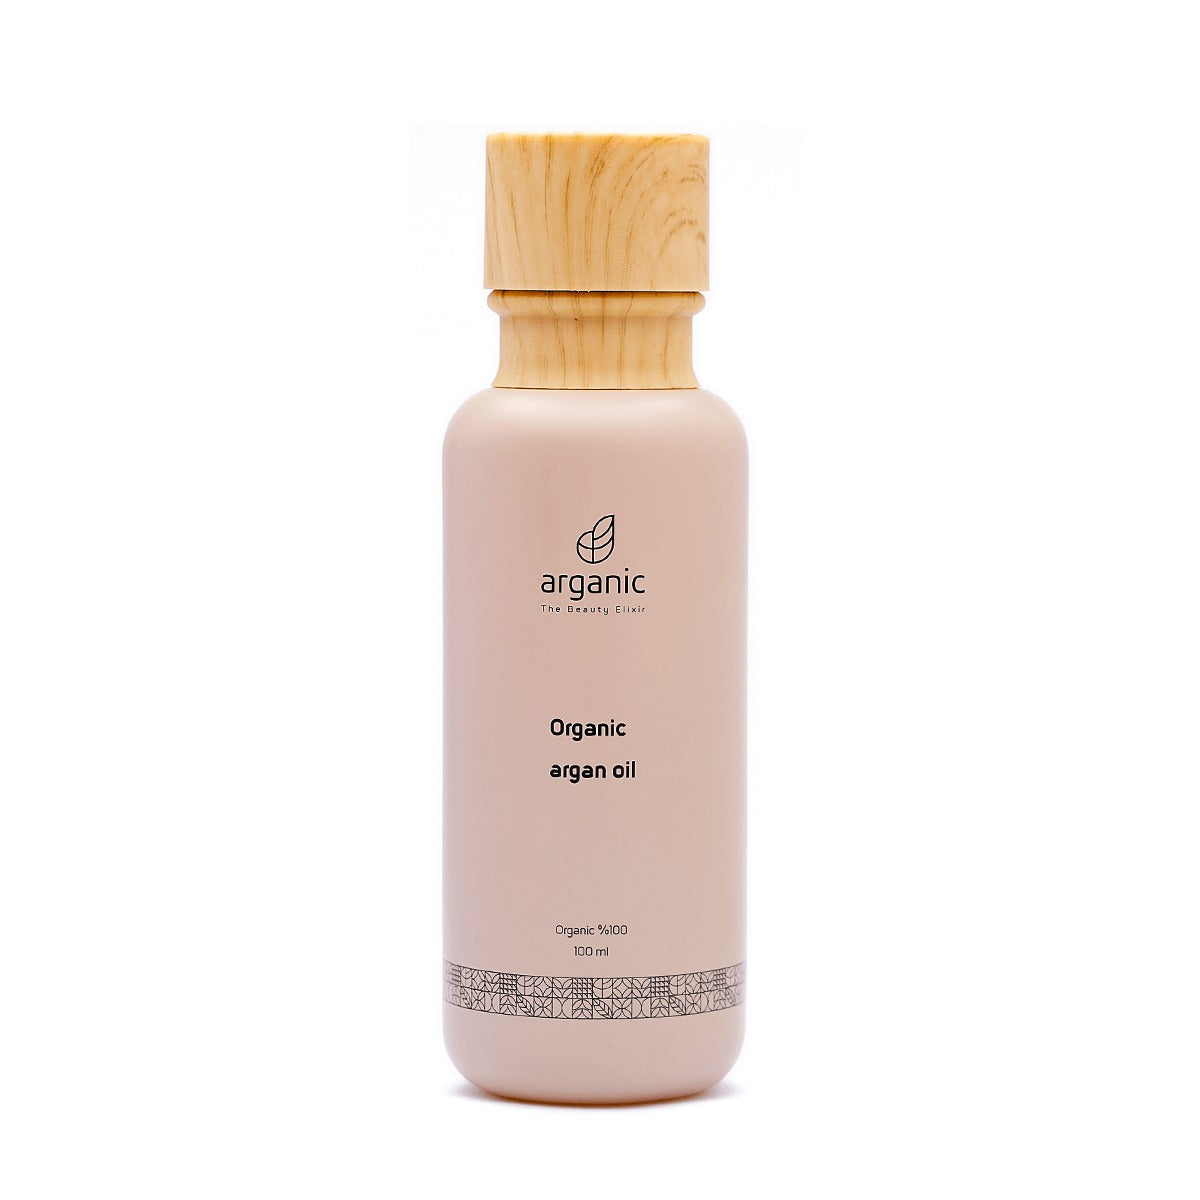 Bottle of organic Arganic argan oil with wooden cap on white background.